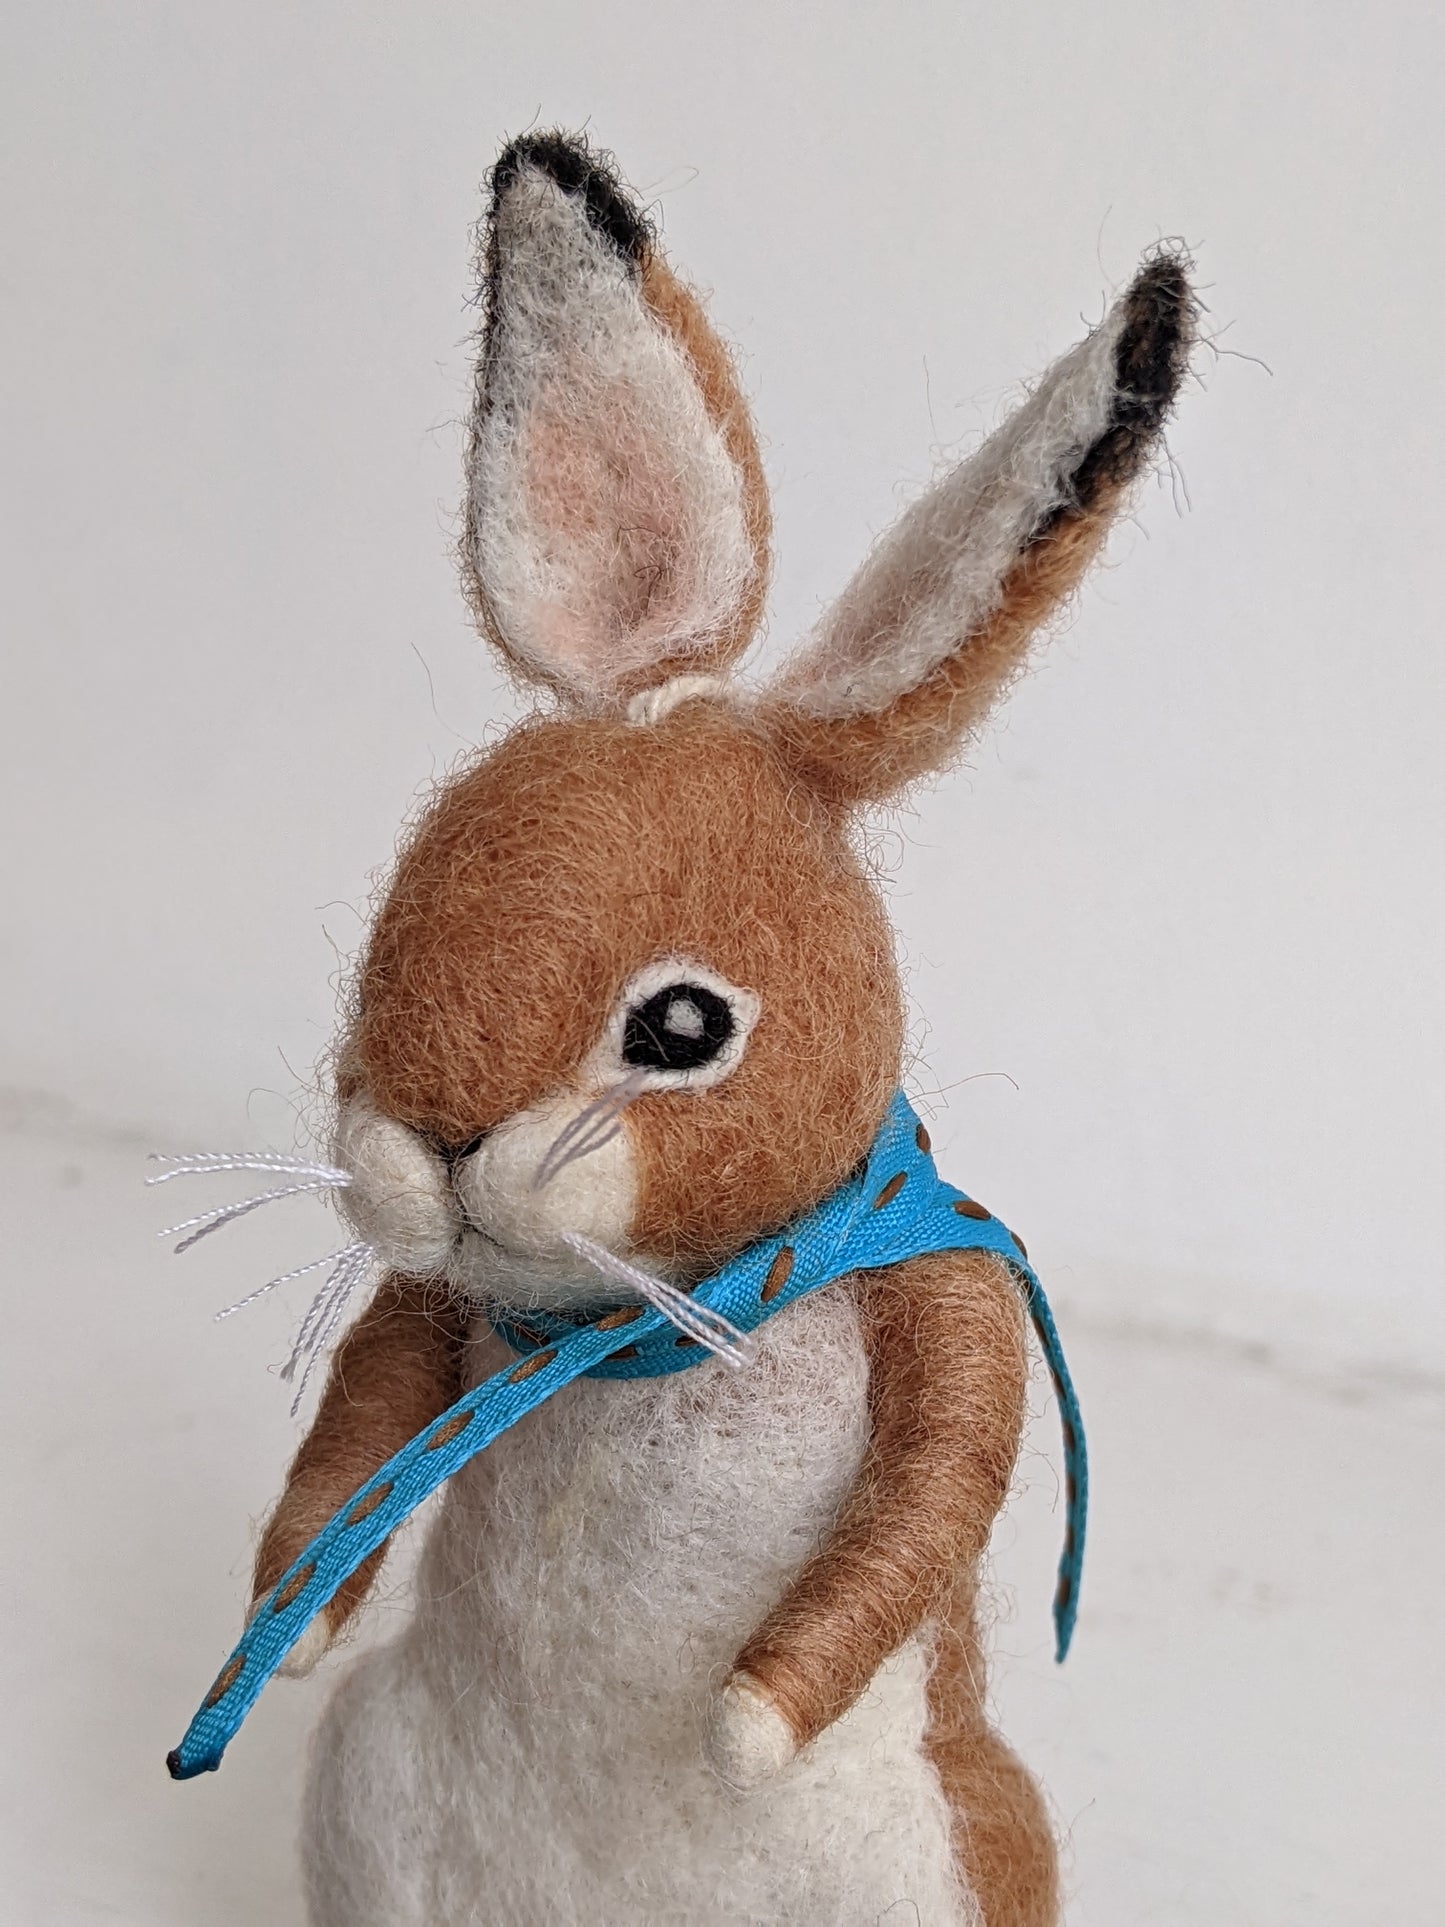 Peter the Rabbit Ornament